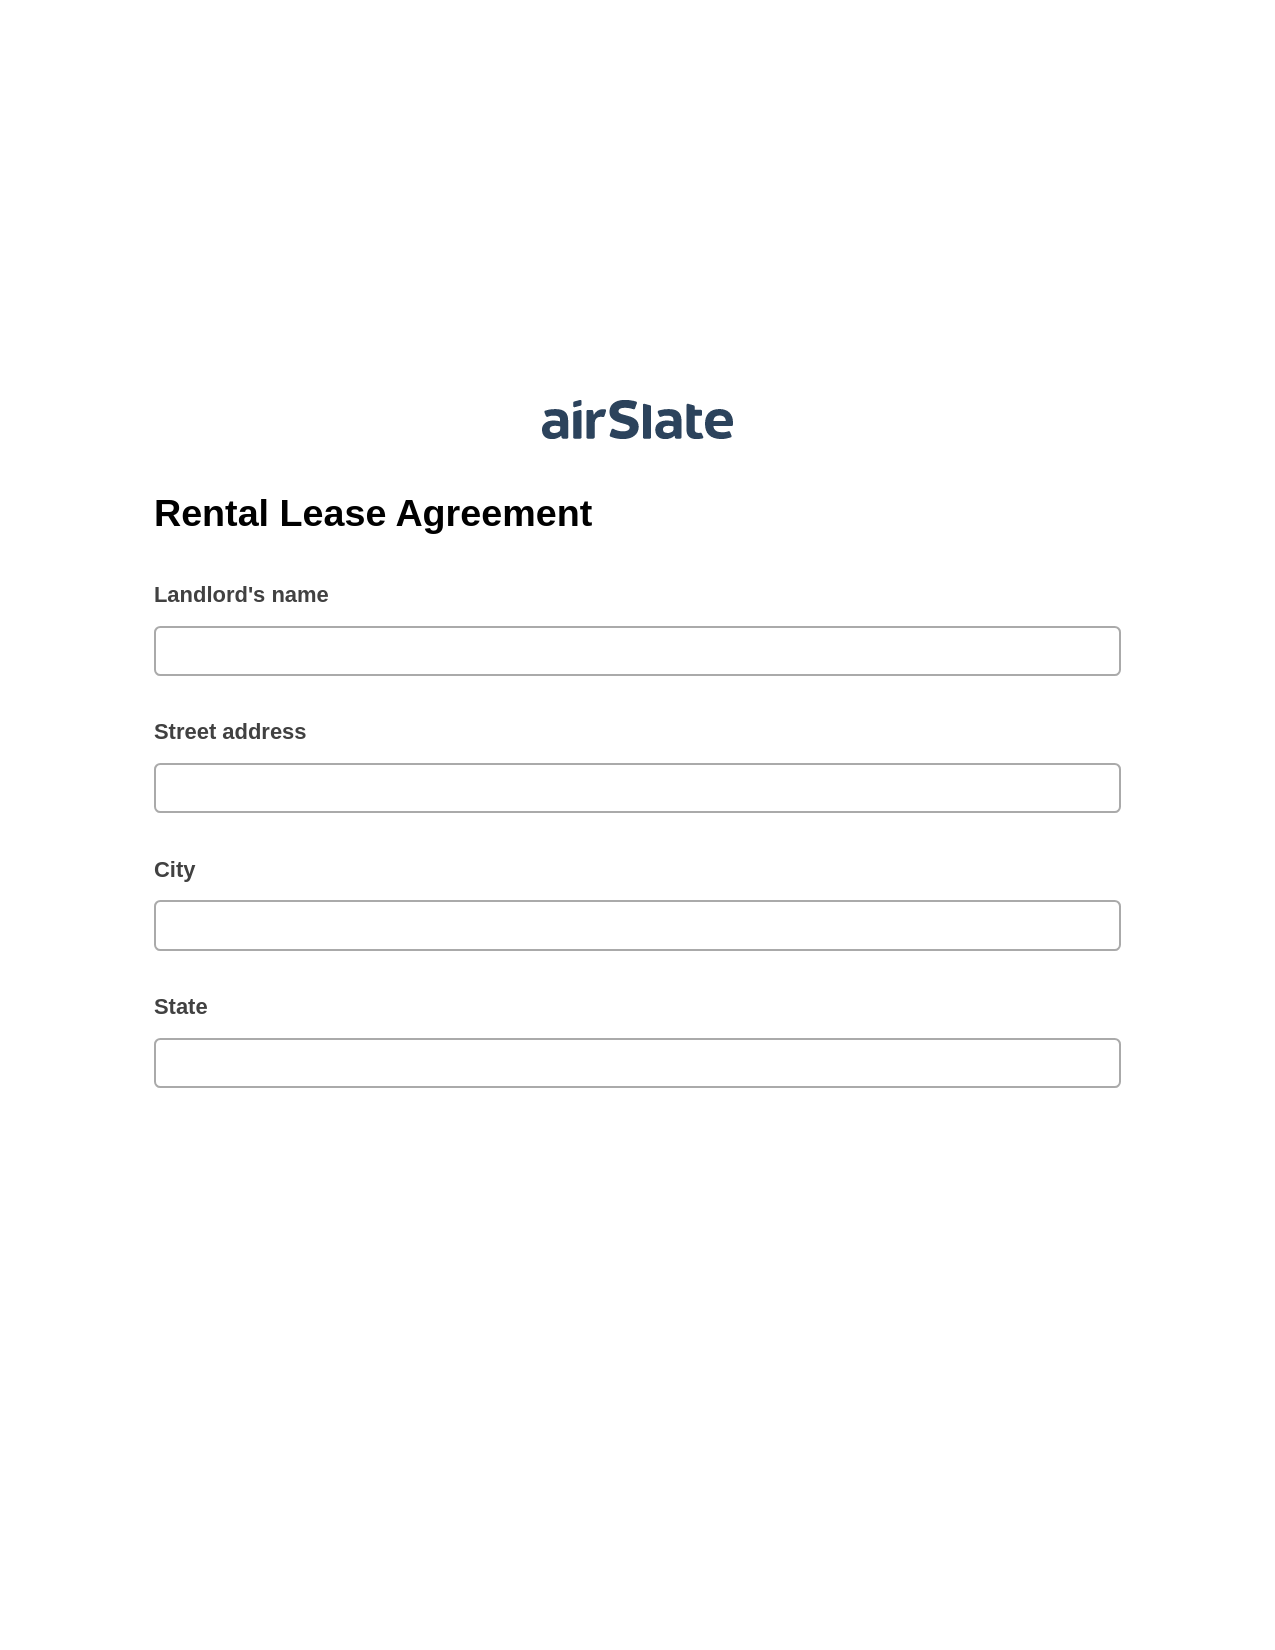 Rental Lease Agreement Pre-fill from MySQL Dropdown Options Bot, Create QuickBooks invoice Bot, Dropbox Bot